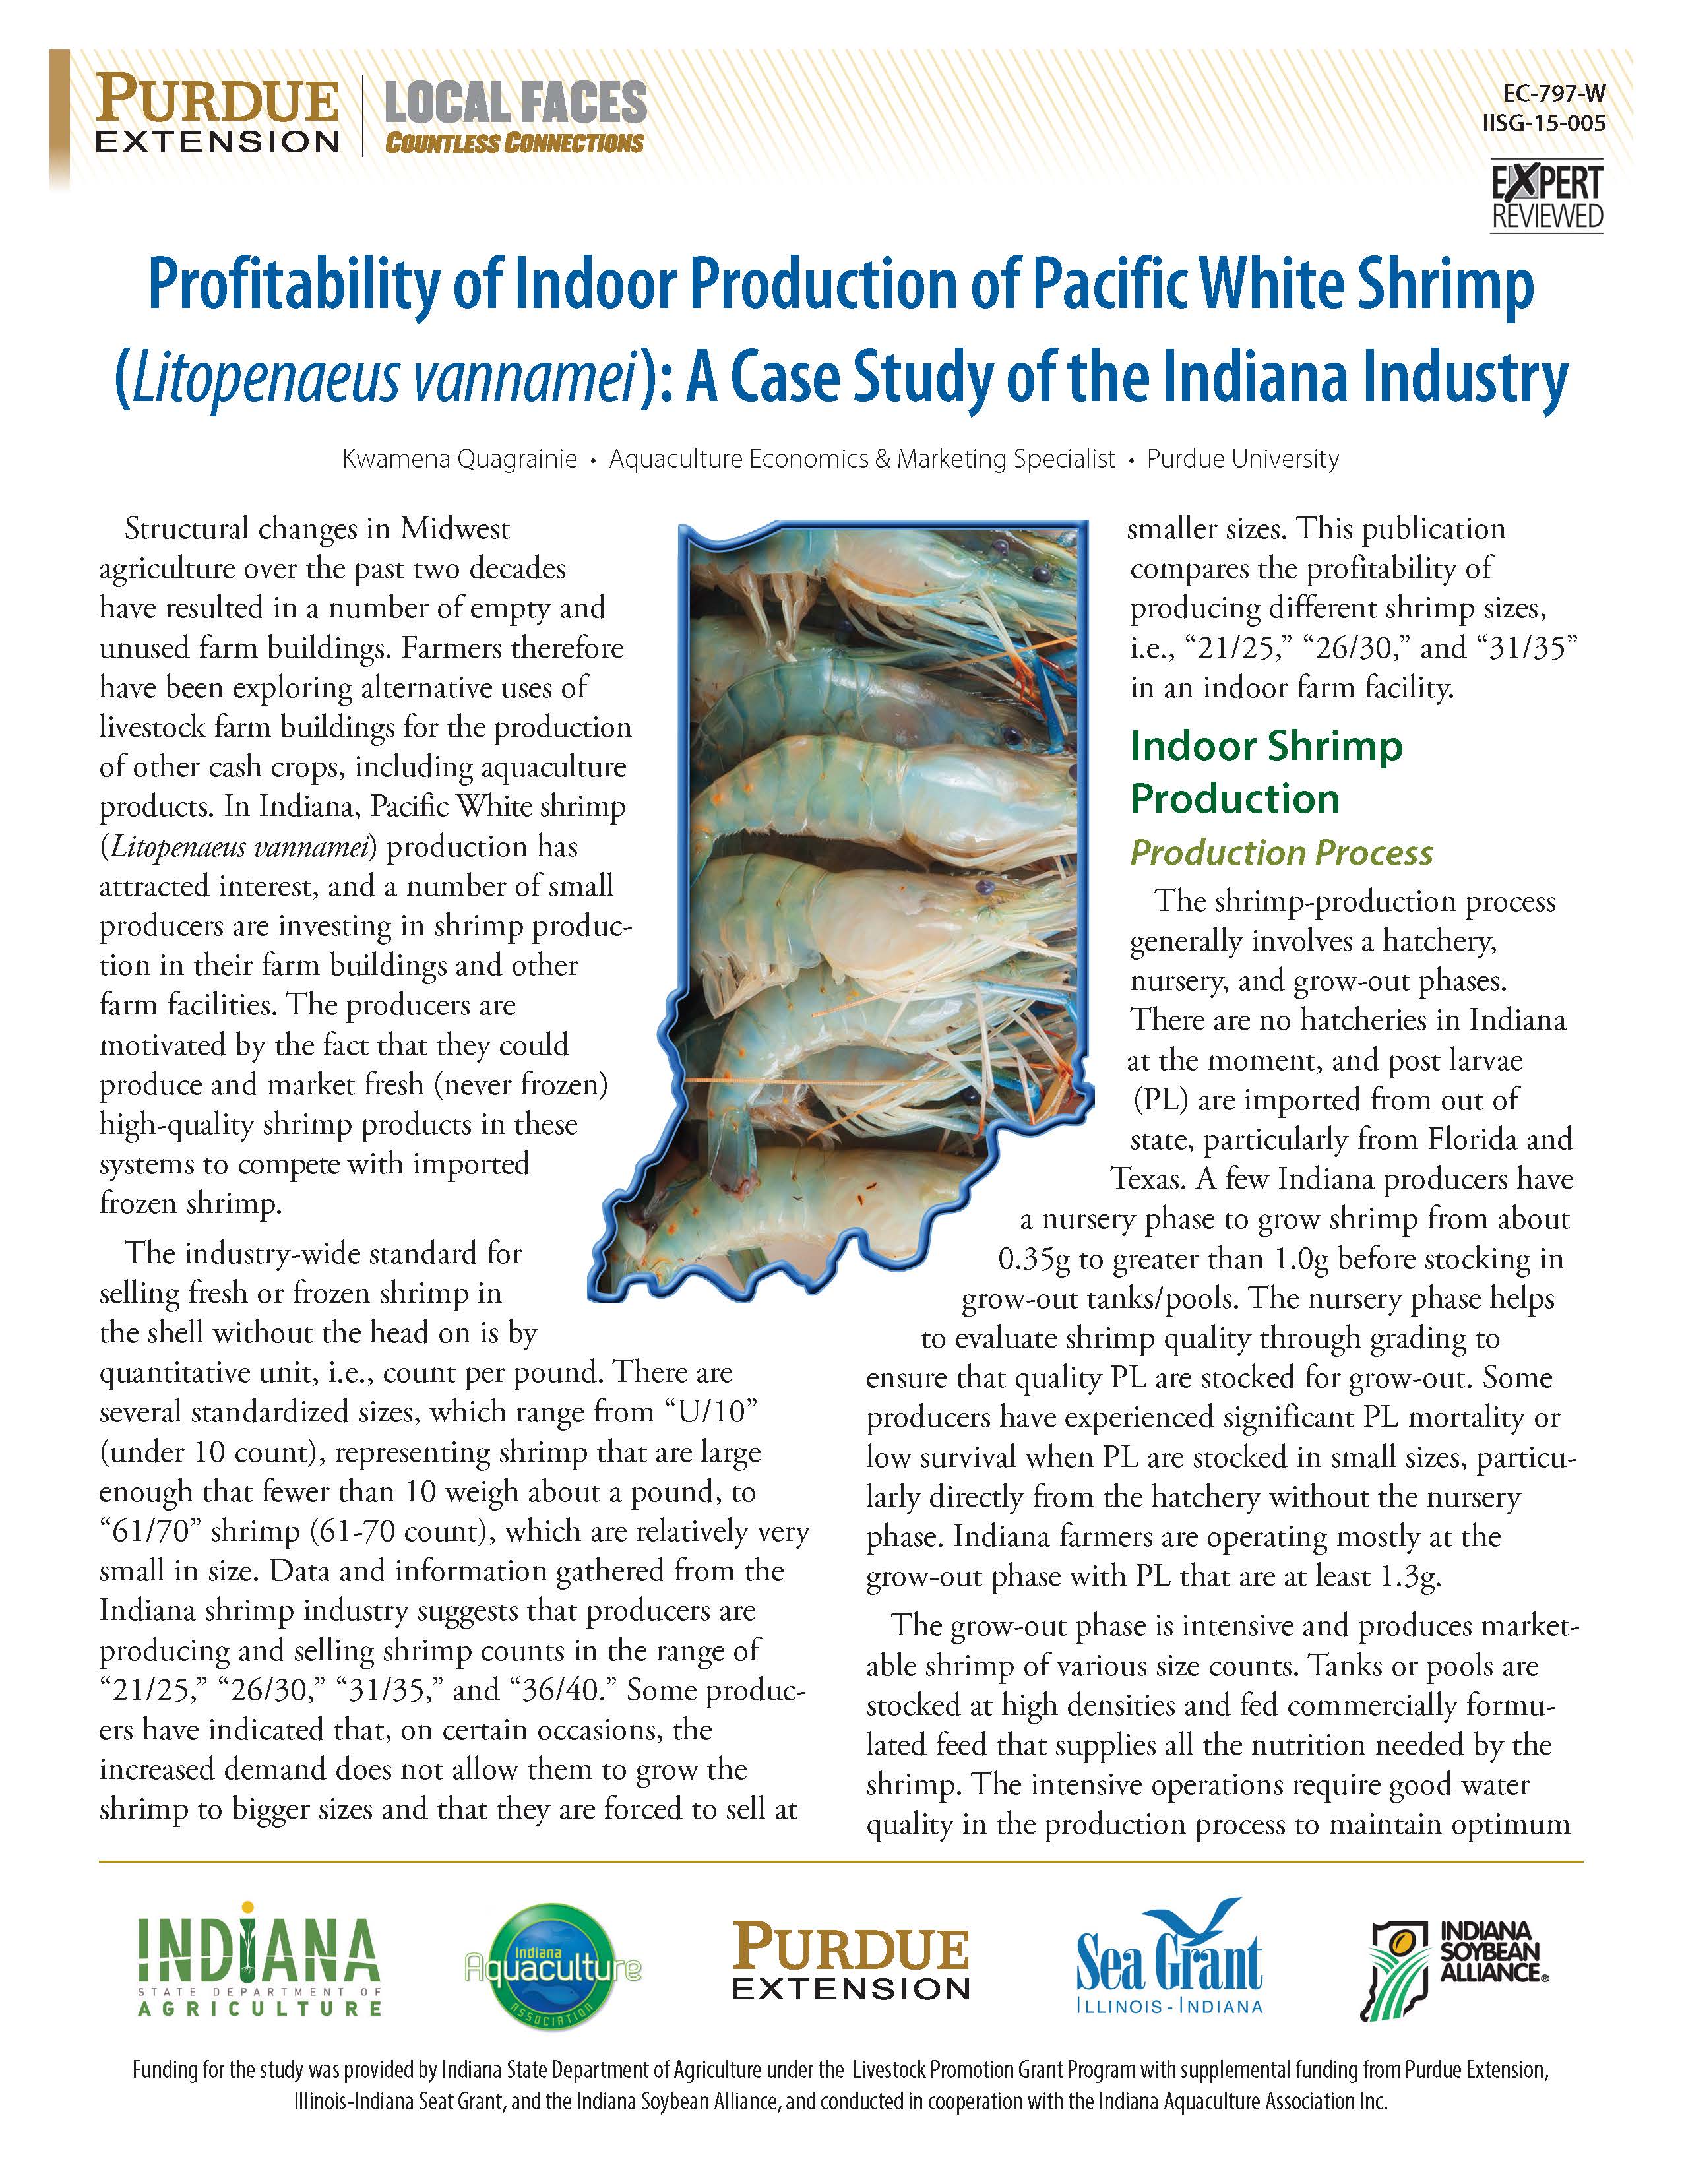 Profitability of Indoor Production of Pacific White Shrimp (Litopenaeus vannamei) Thumbnail